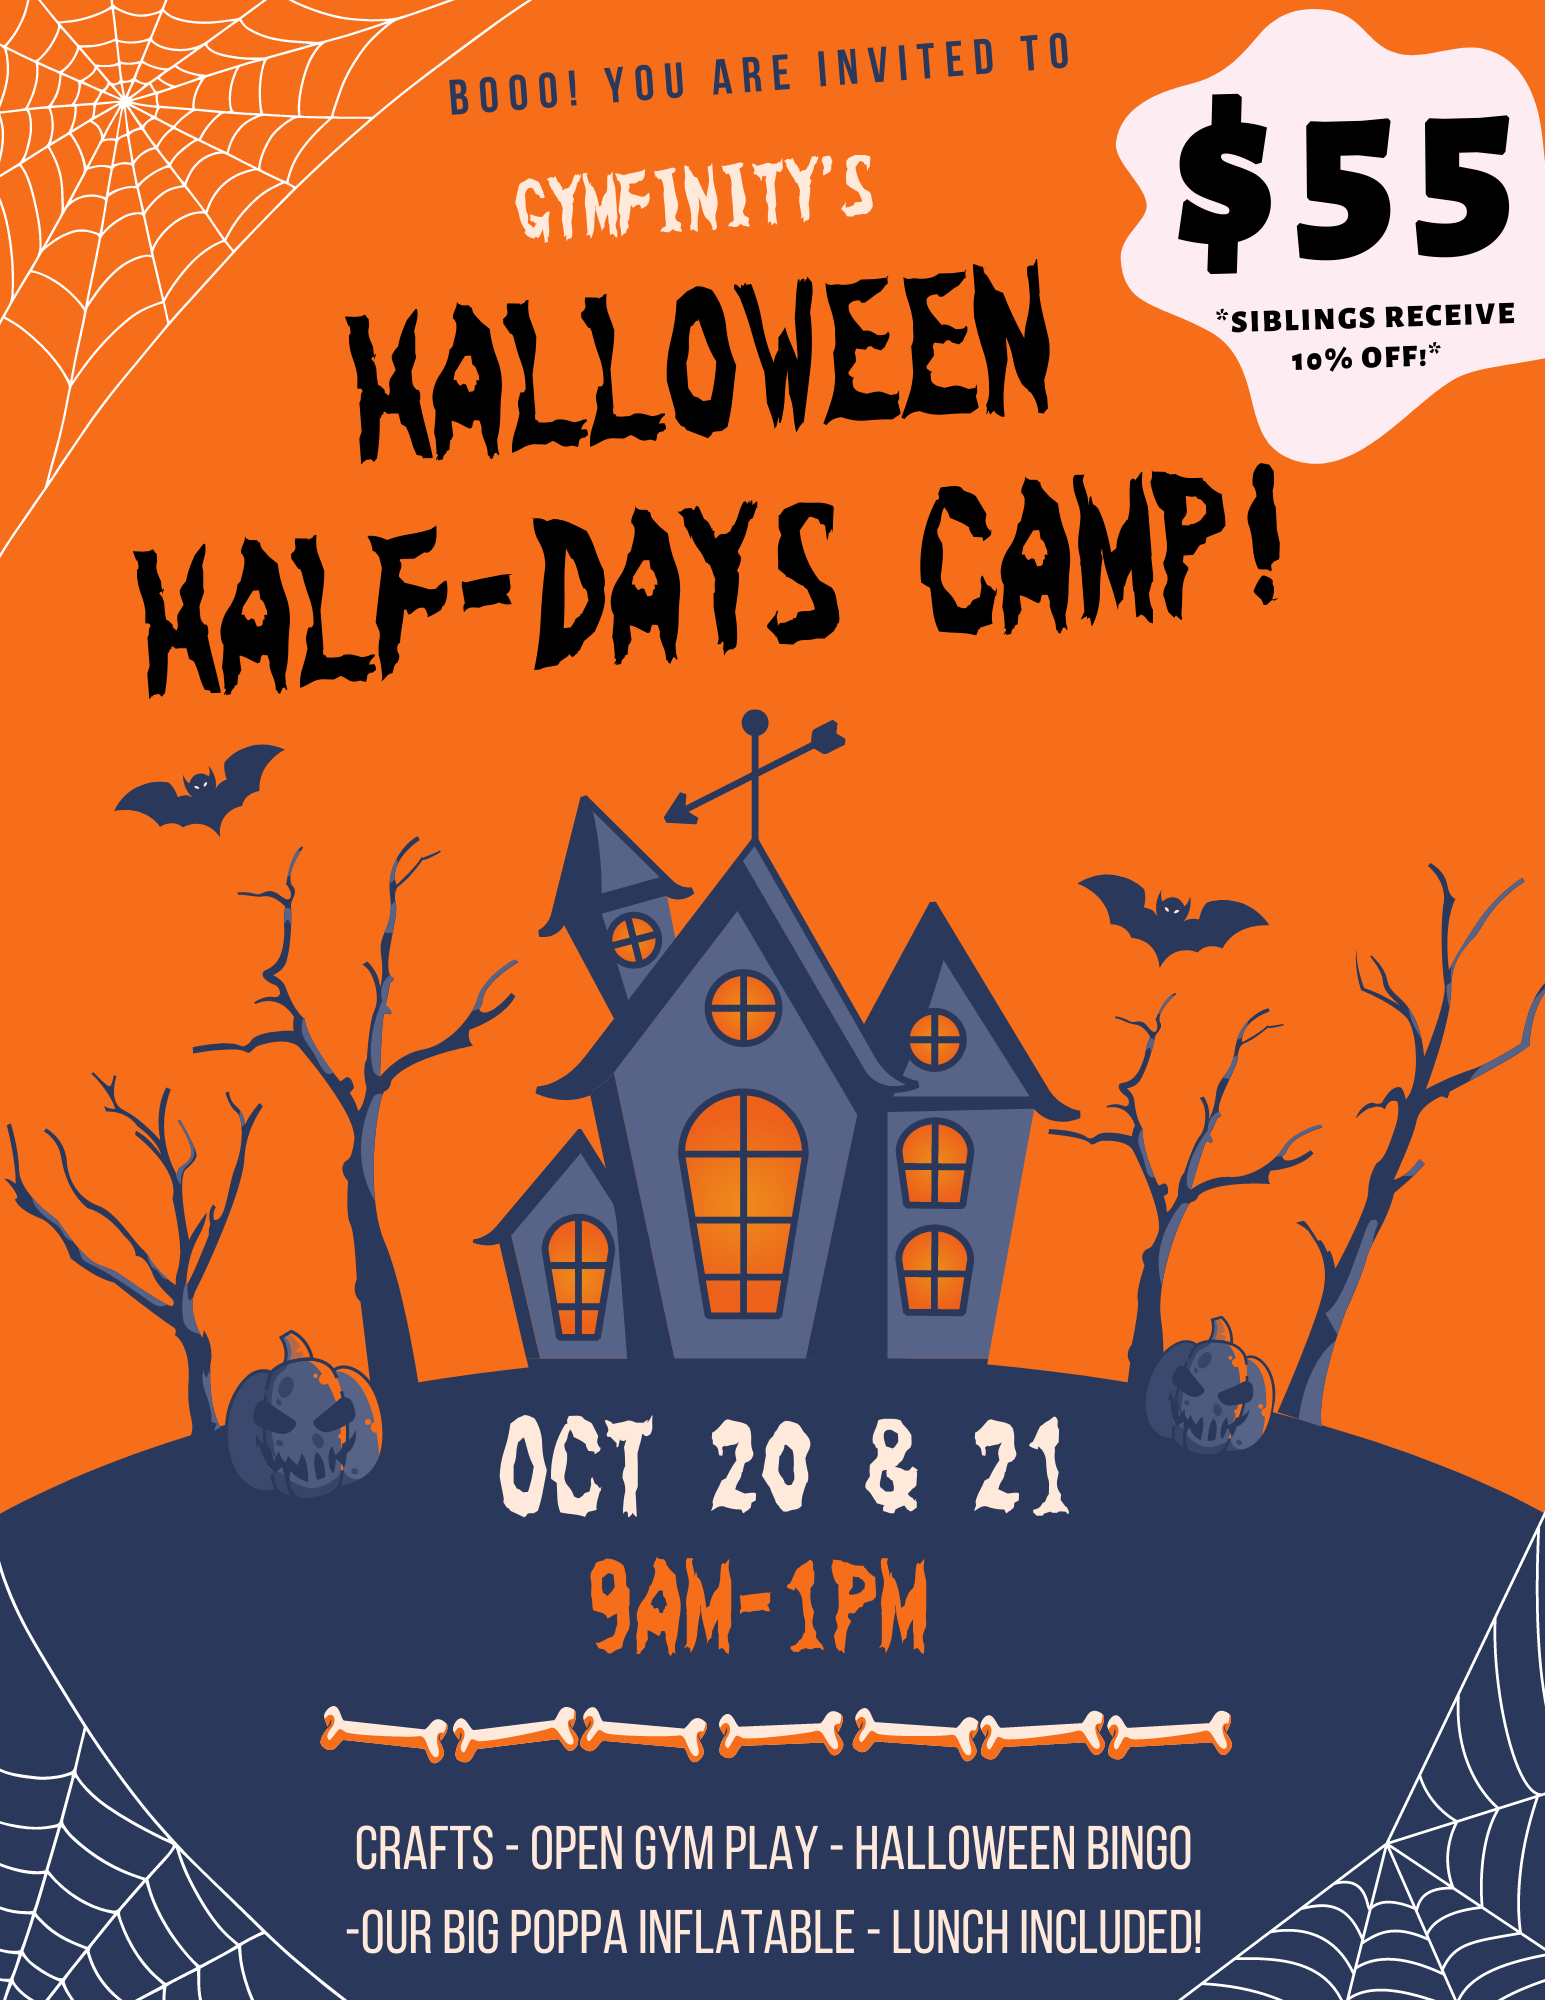 Halloween Half Days Camp